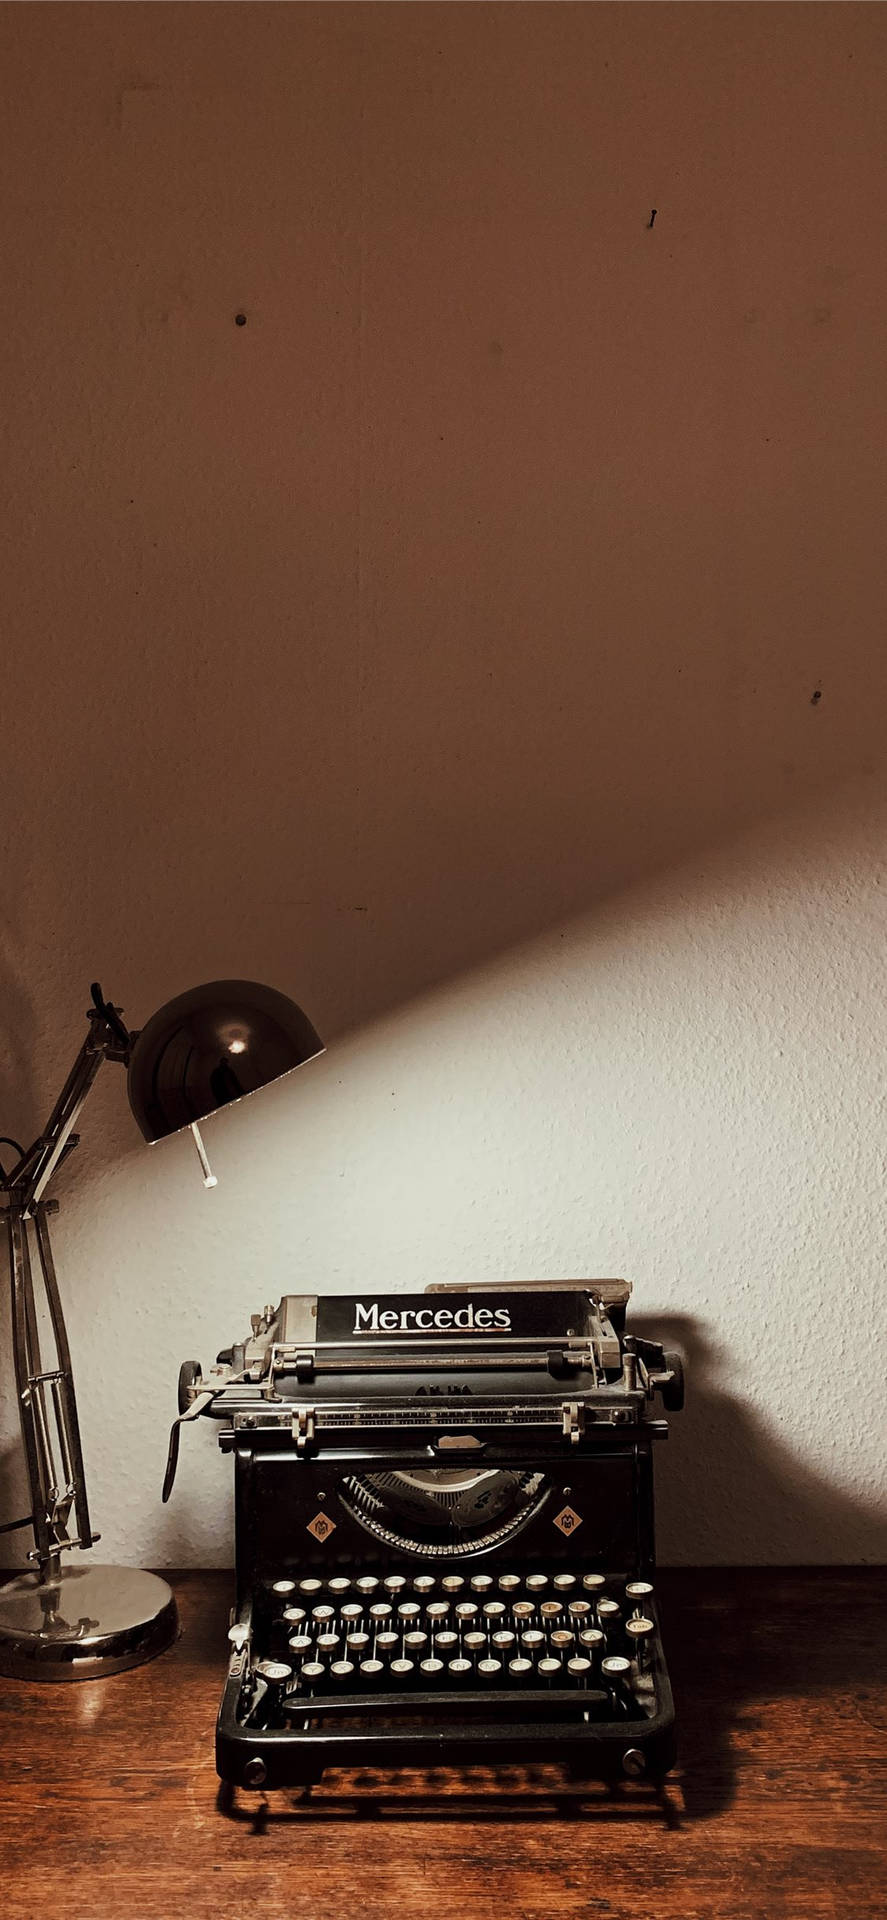 Iphone Desk Typewriter Picture